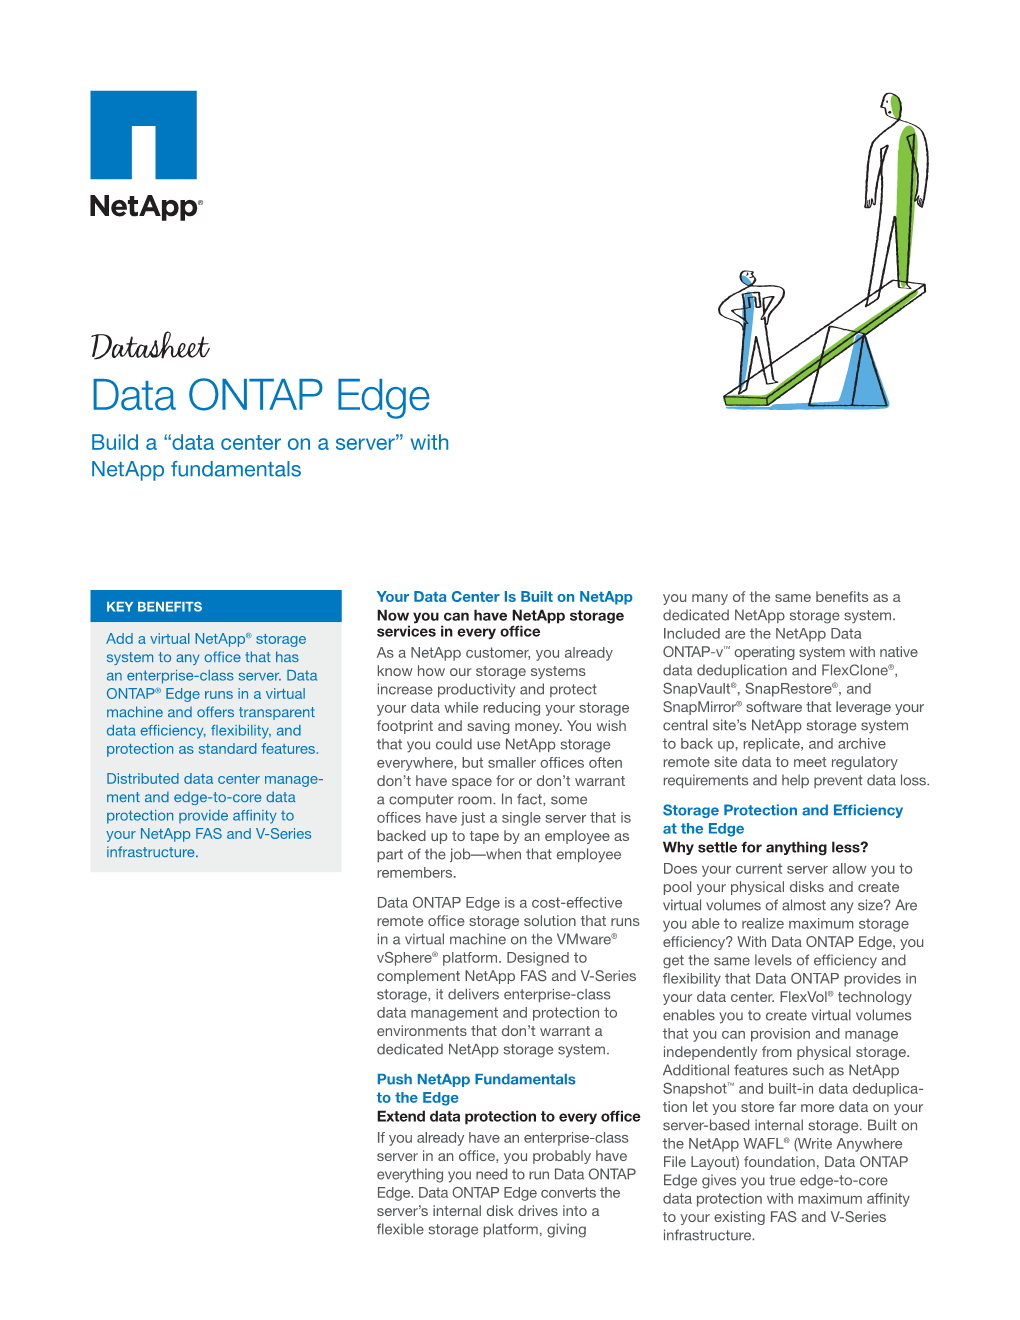 Data ONTAP Edge Build a “Data Center on a Server” with Netapp Fundamentals